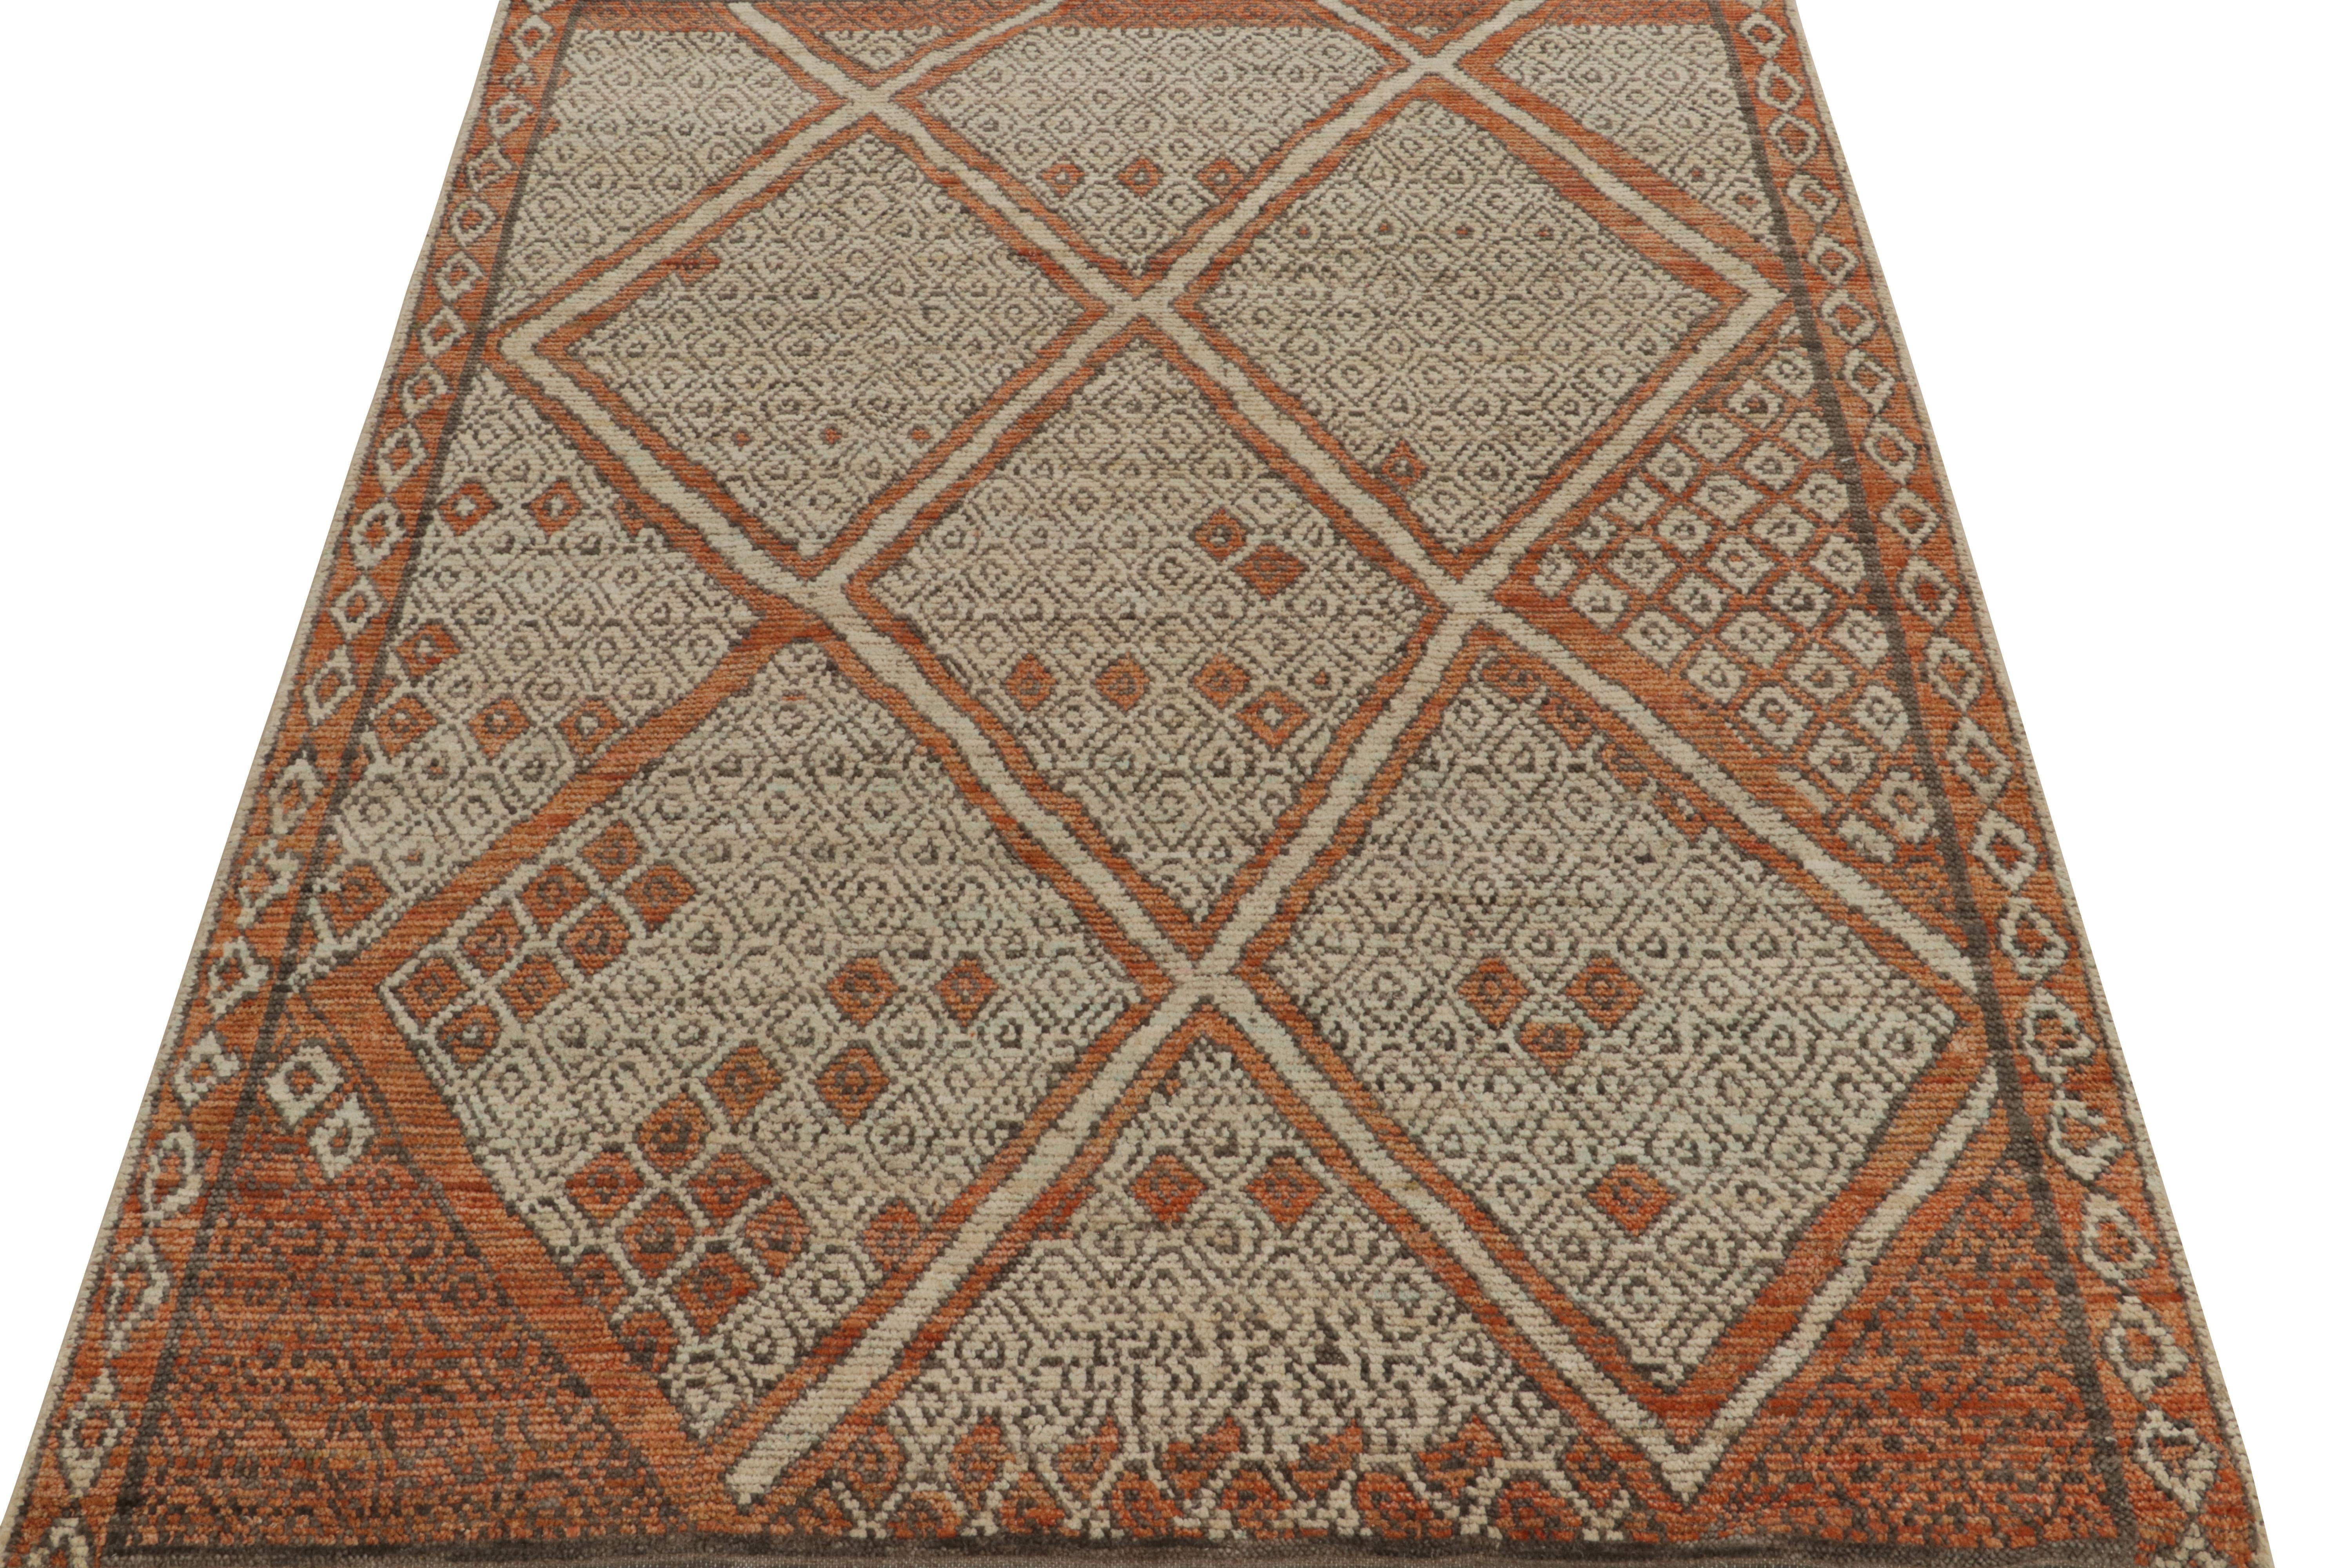 Tribal Rug & Kilim’s Moroccan Style Rug in Orange, White & Beige-Brown Diamond Patterns For Sale